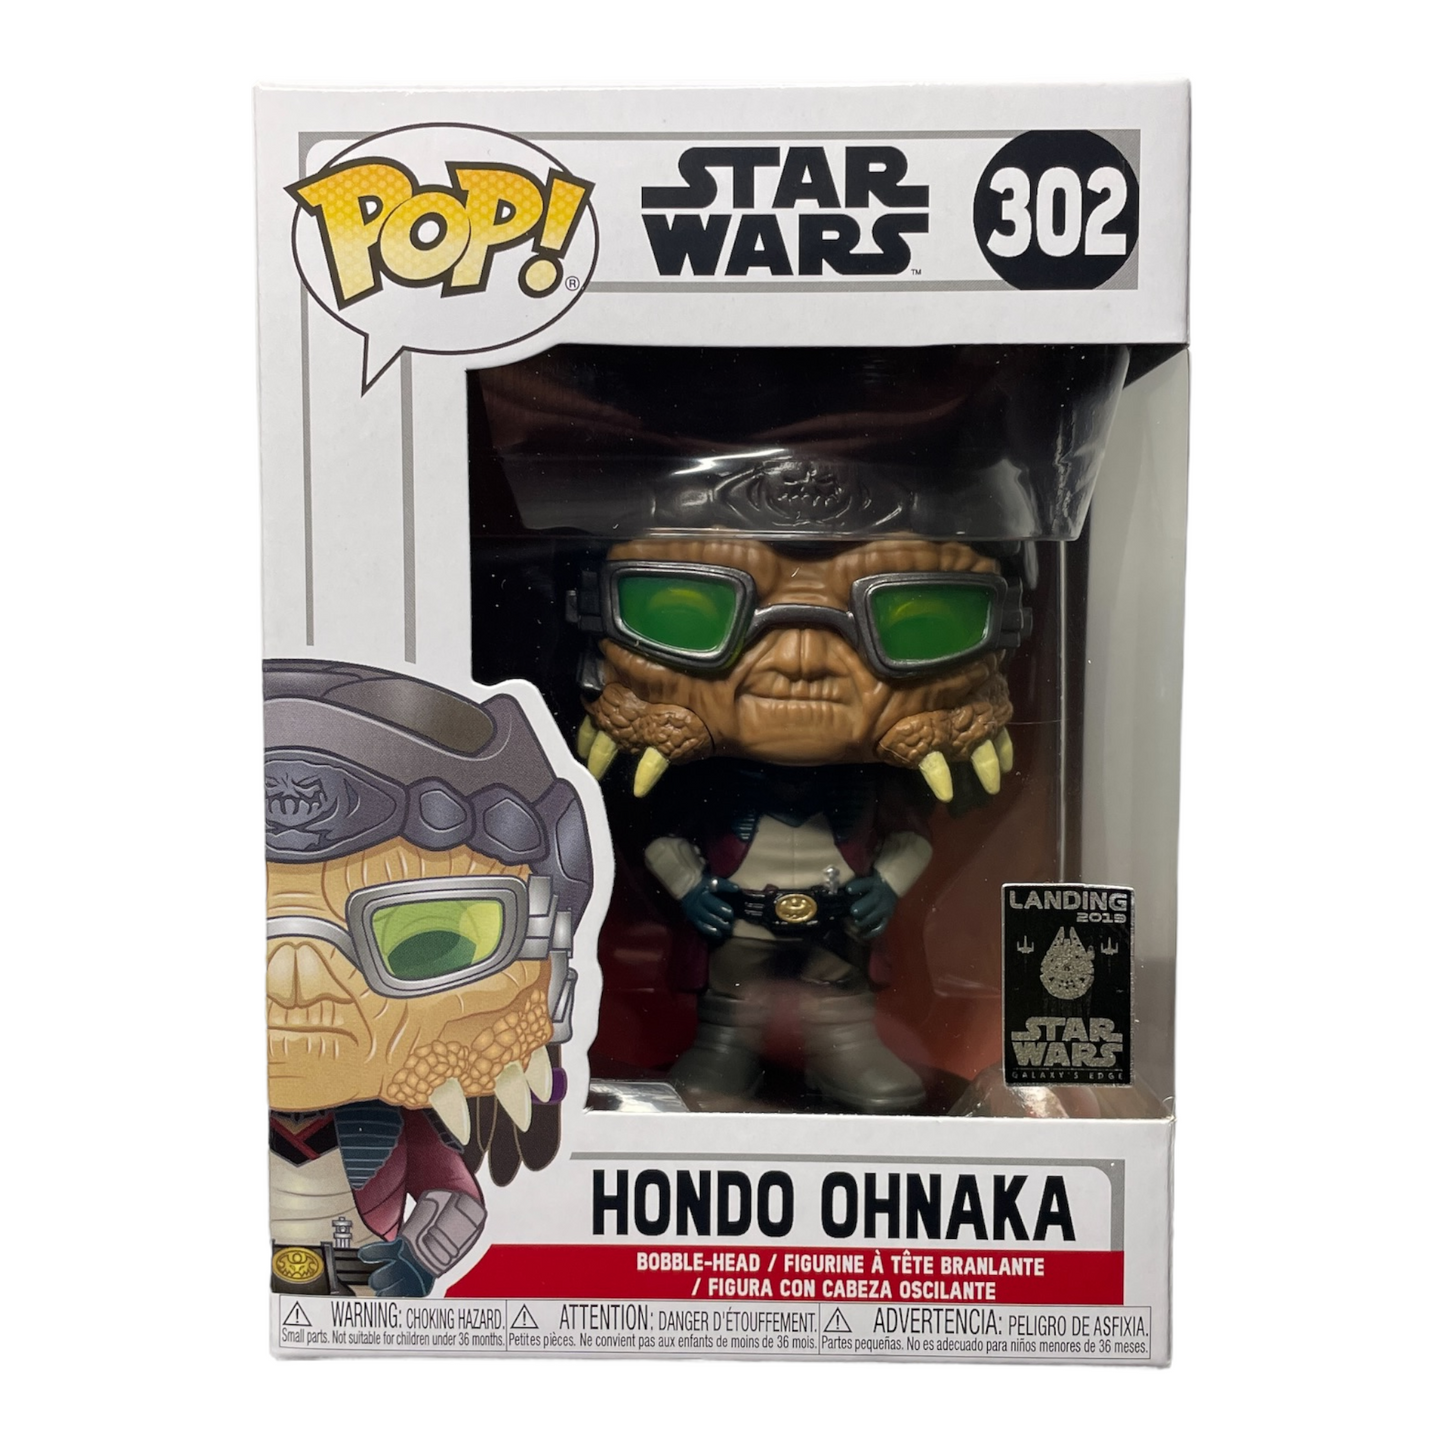 Hondo Ohnaka #302